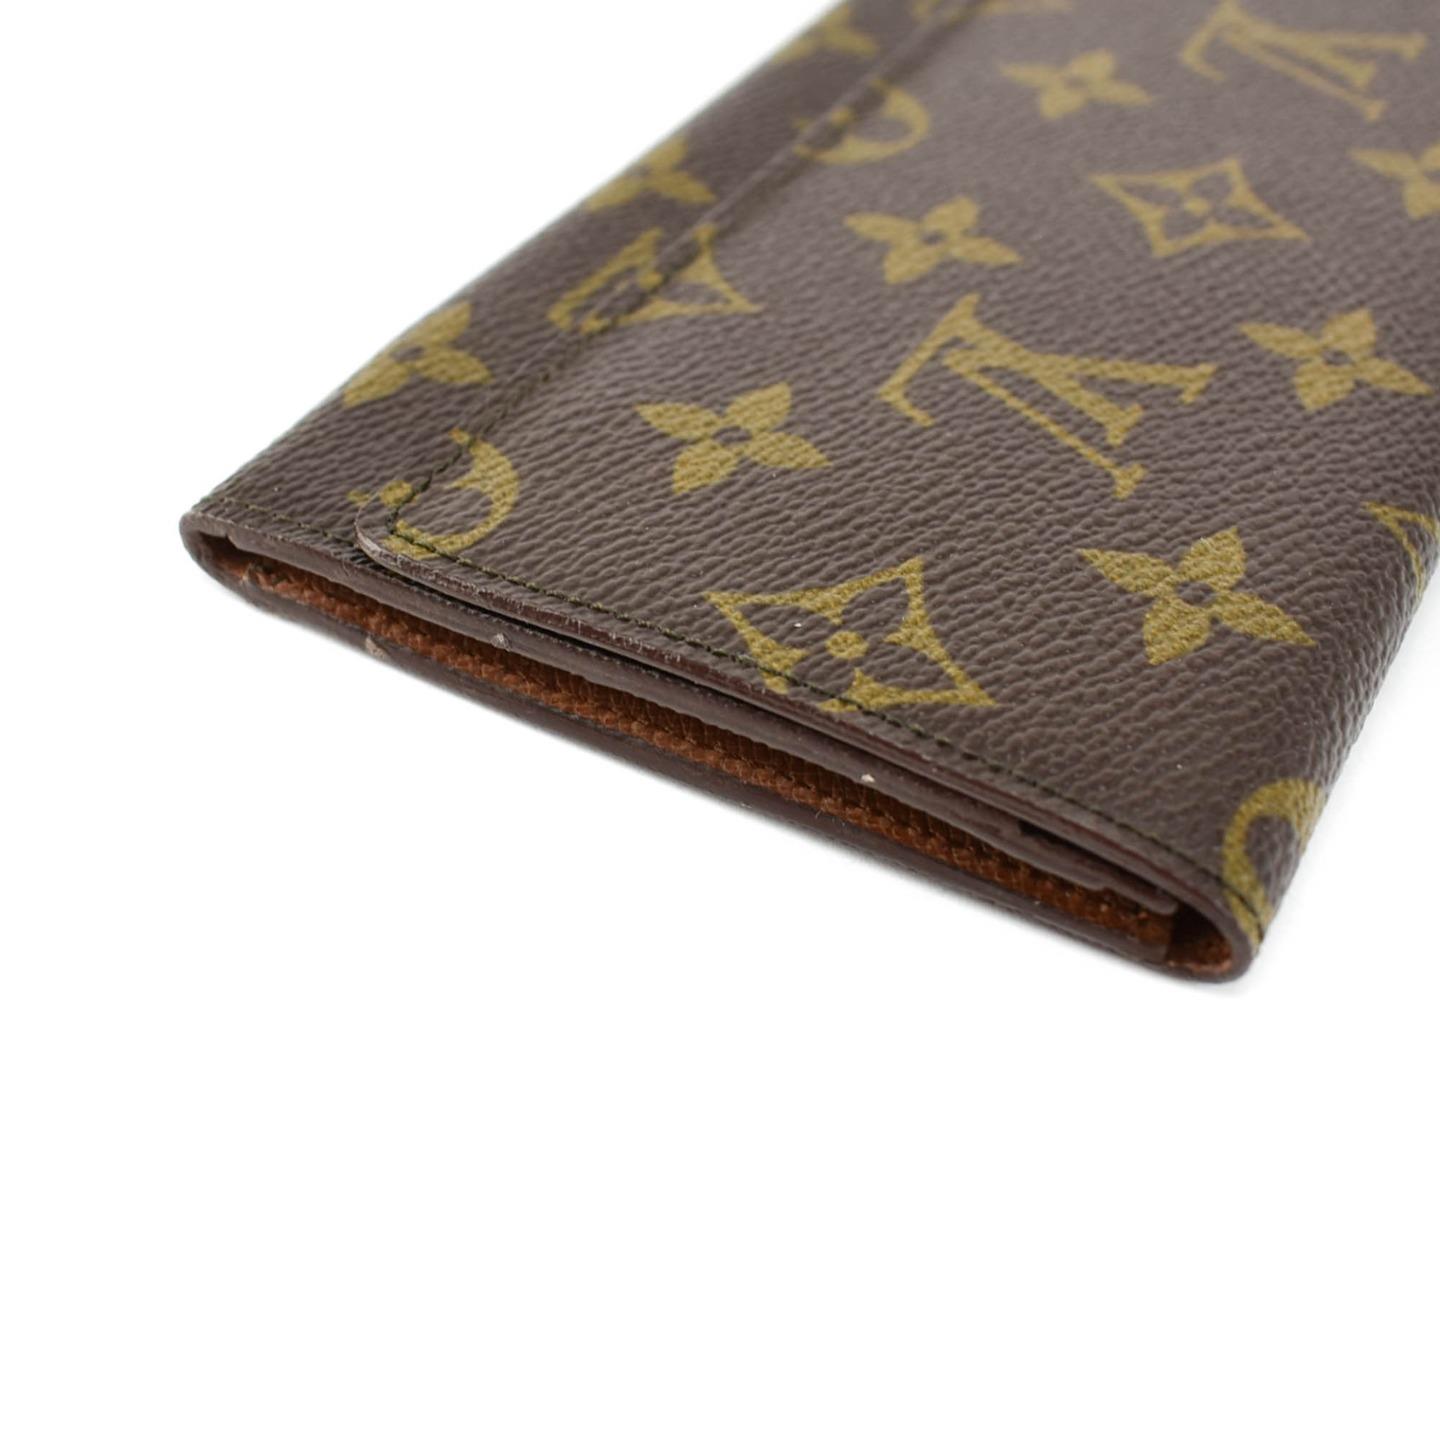 LOUIS VUITTON: Brown &quot;LV&quot; Logo & Leather Checkbook Cover/Wallet (vt) | eBay